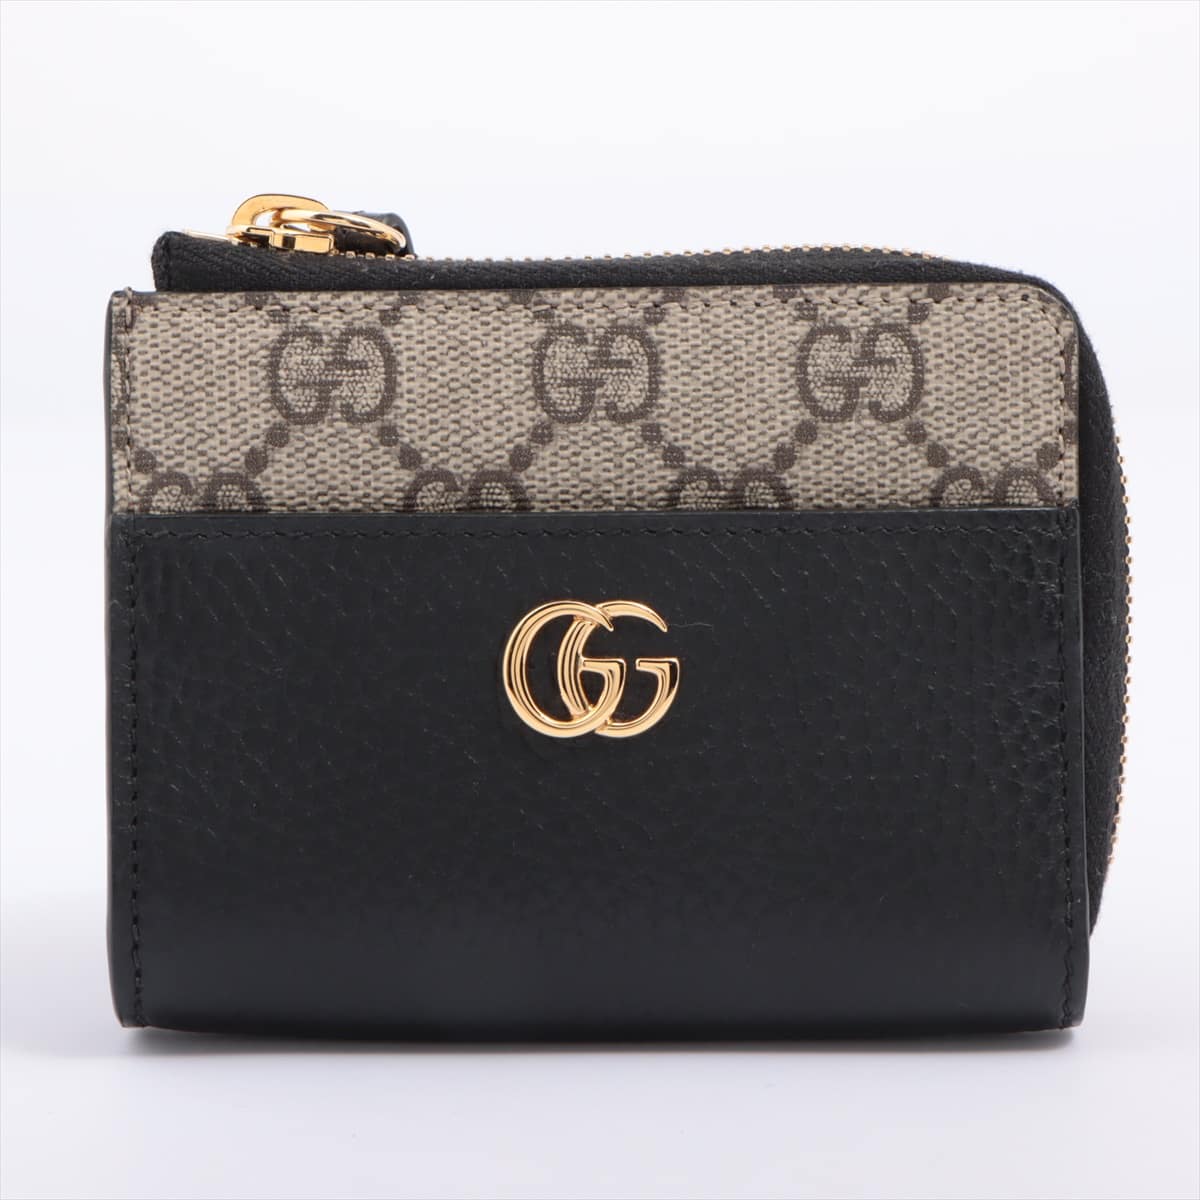 Gucci GG Marmont 658609 PVC & leather Coin purse black x beige